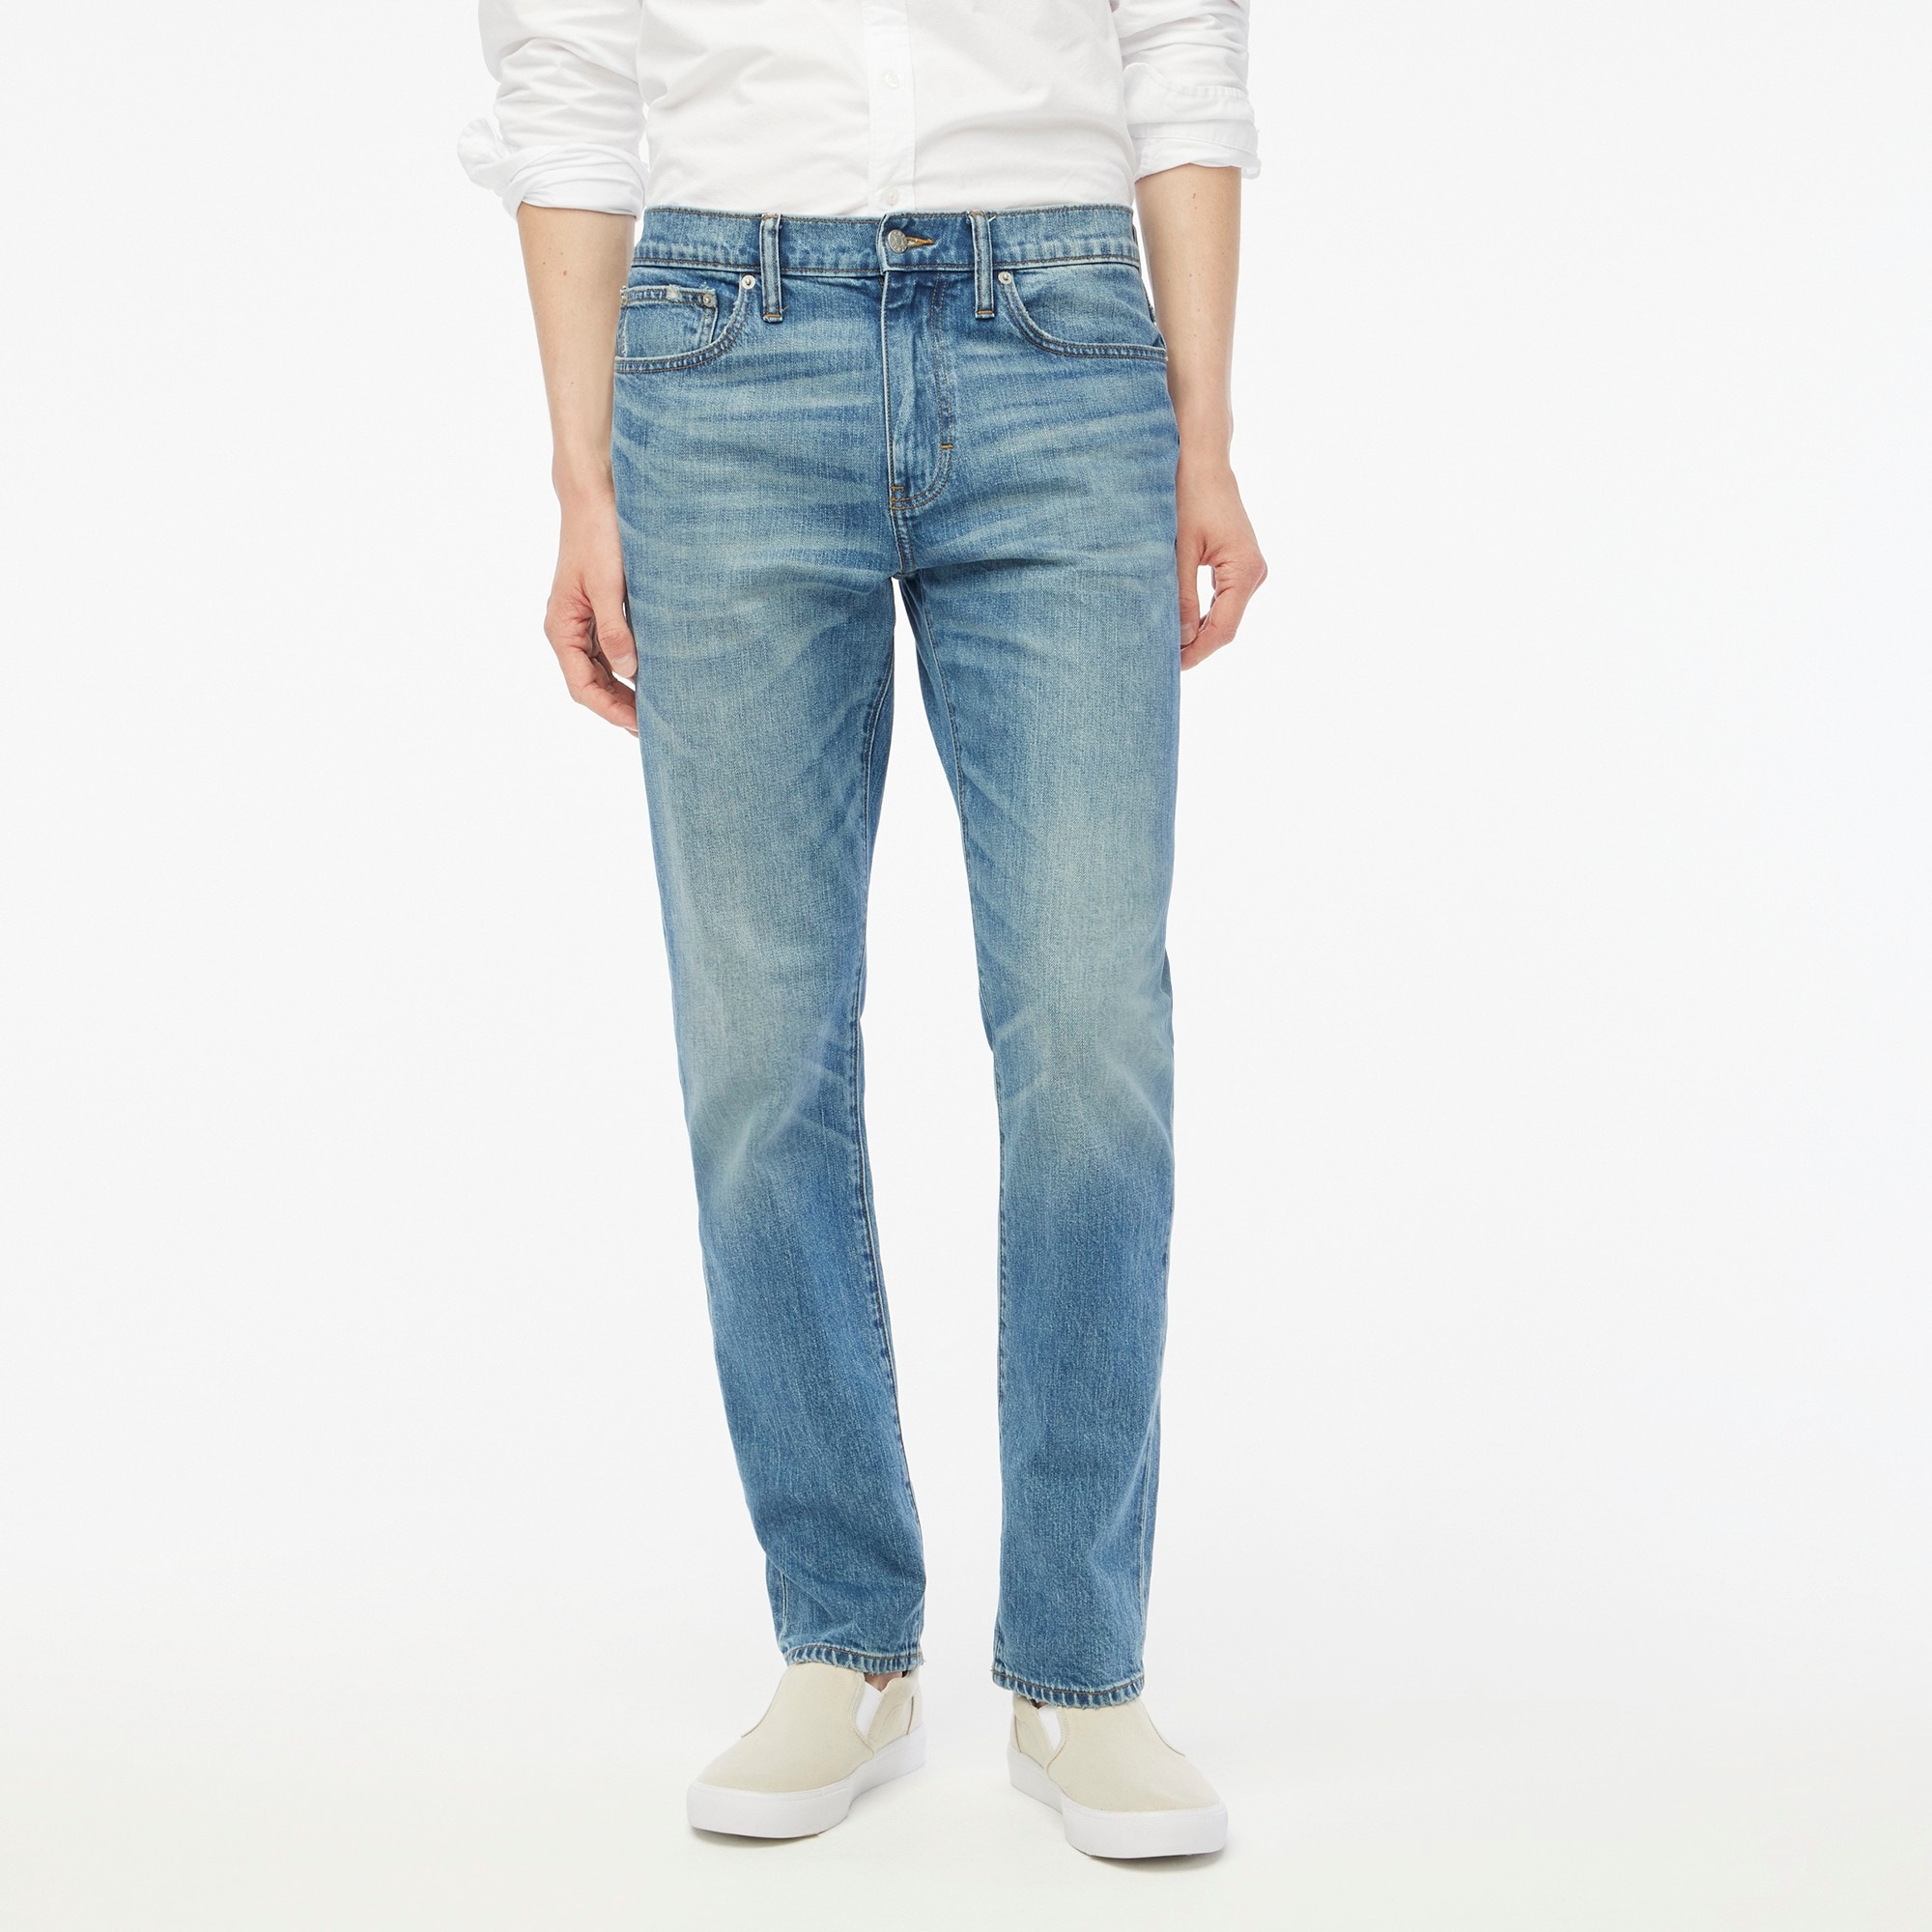 Straight-fit jean vintage flex